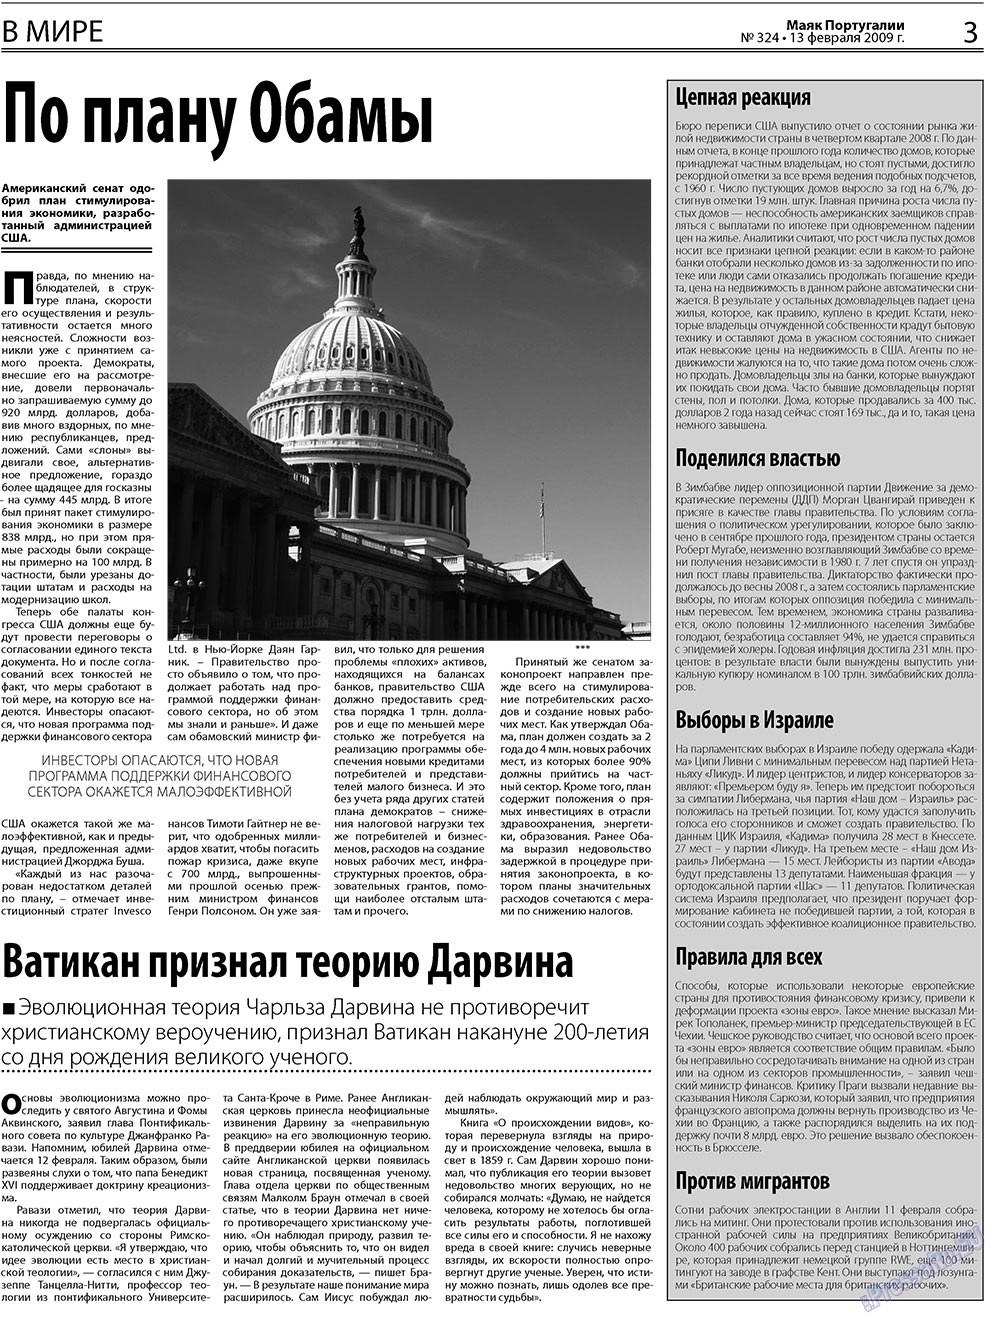 Маяк Португалии, газета. 2009 №7 стр.3